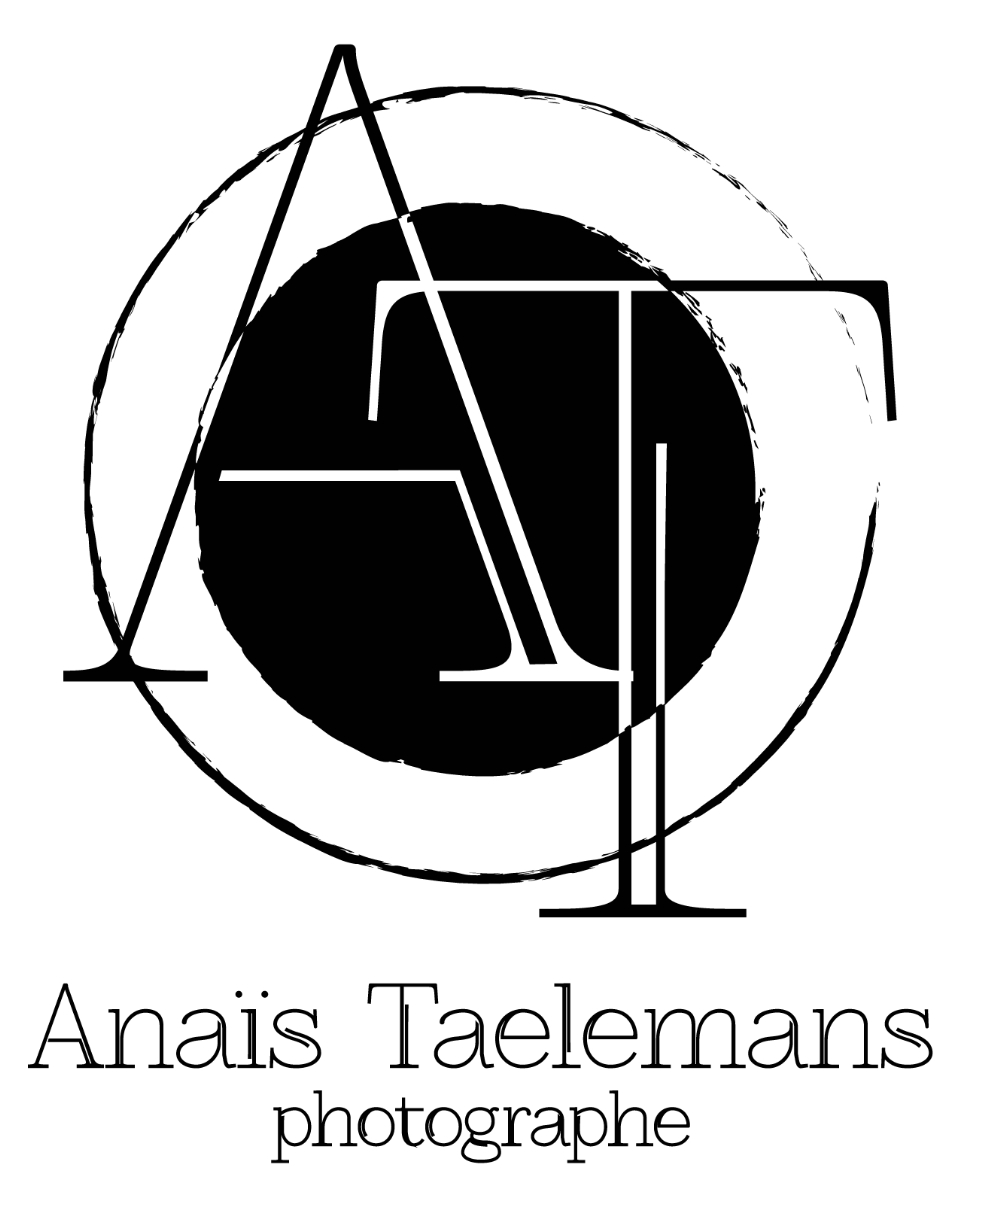 Anas Taelemans